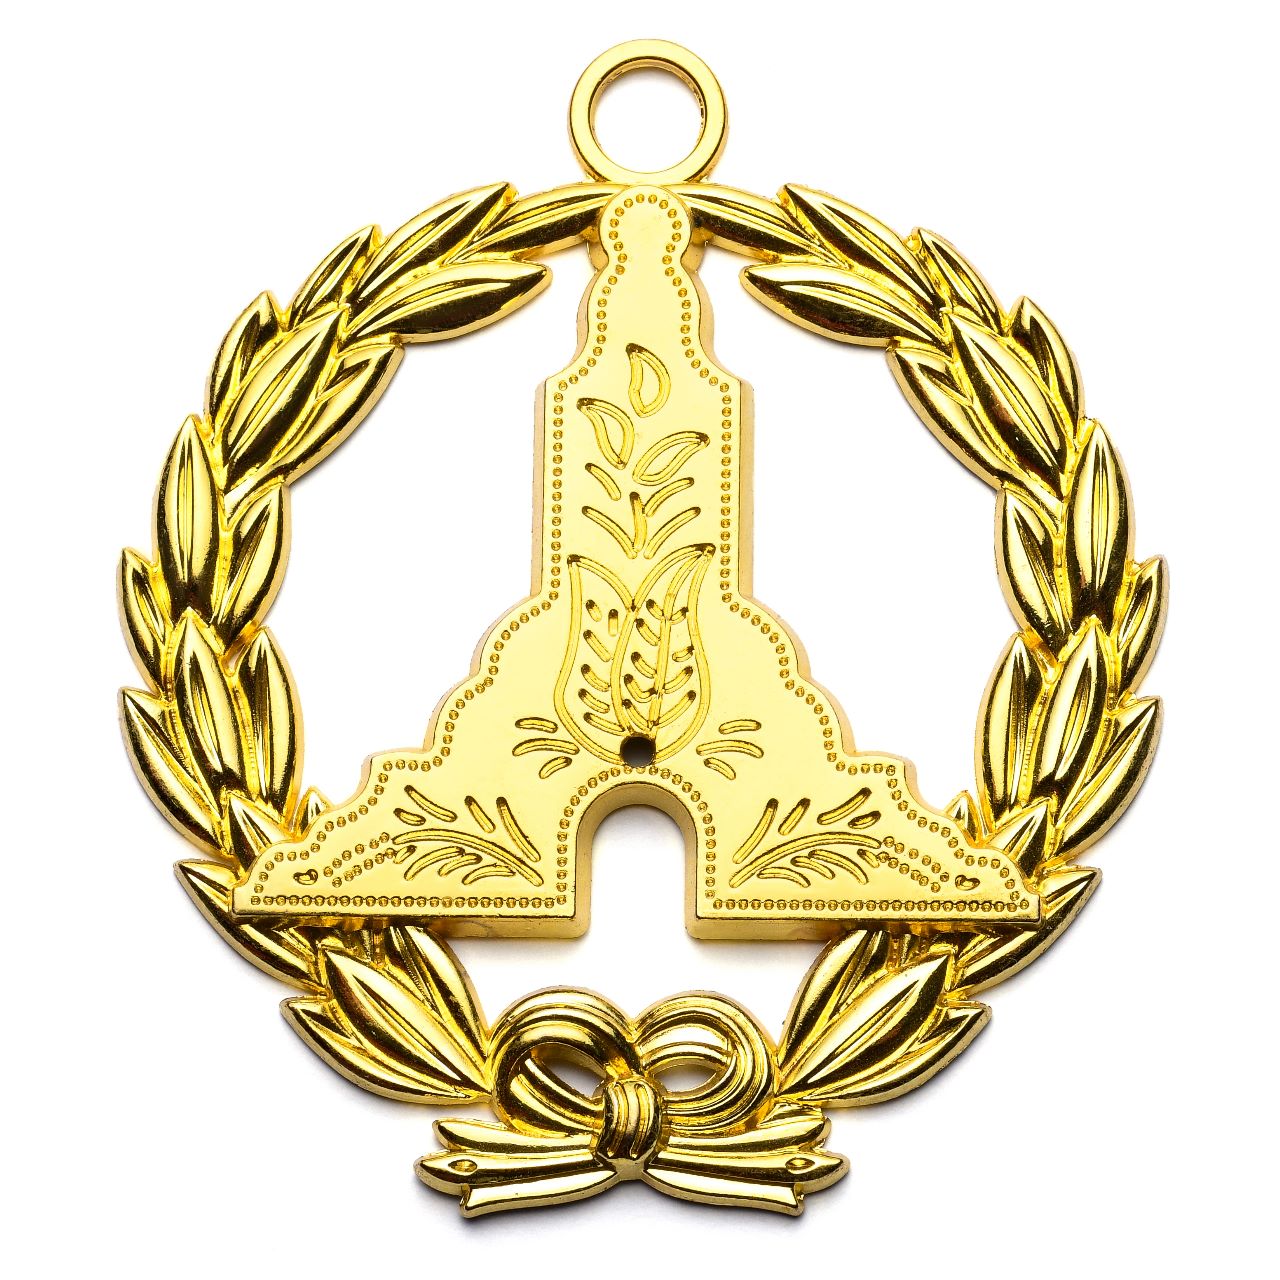 Senior Warden Blue Lodge Collar Jewel - Gold Plated - Bricks Masons